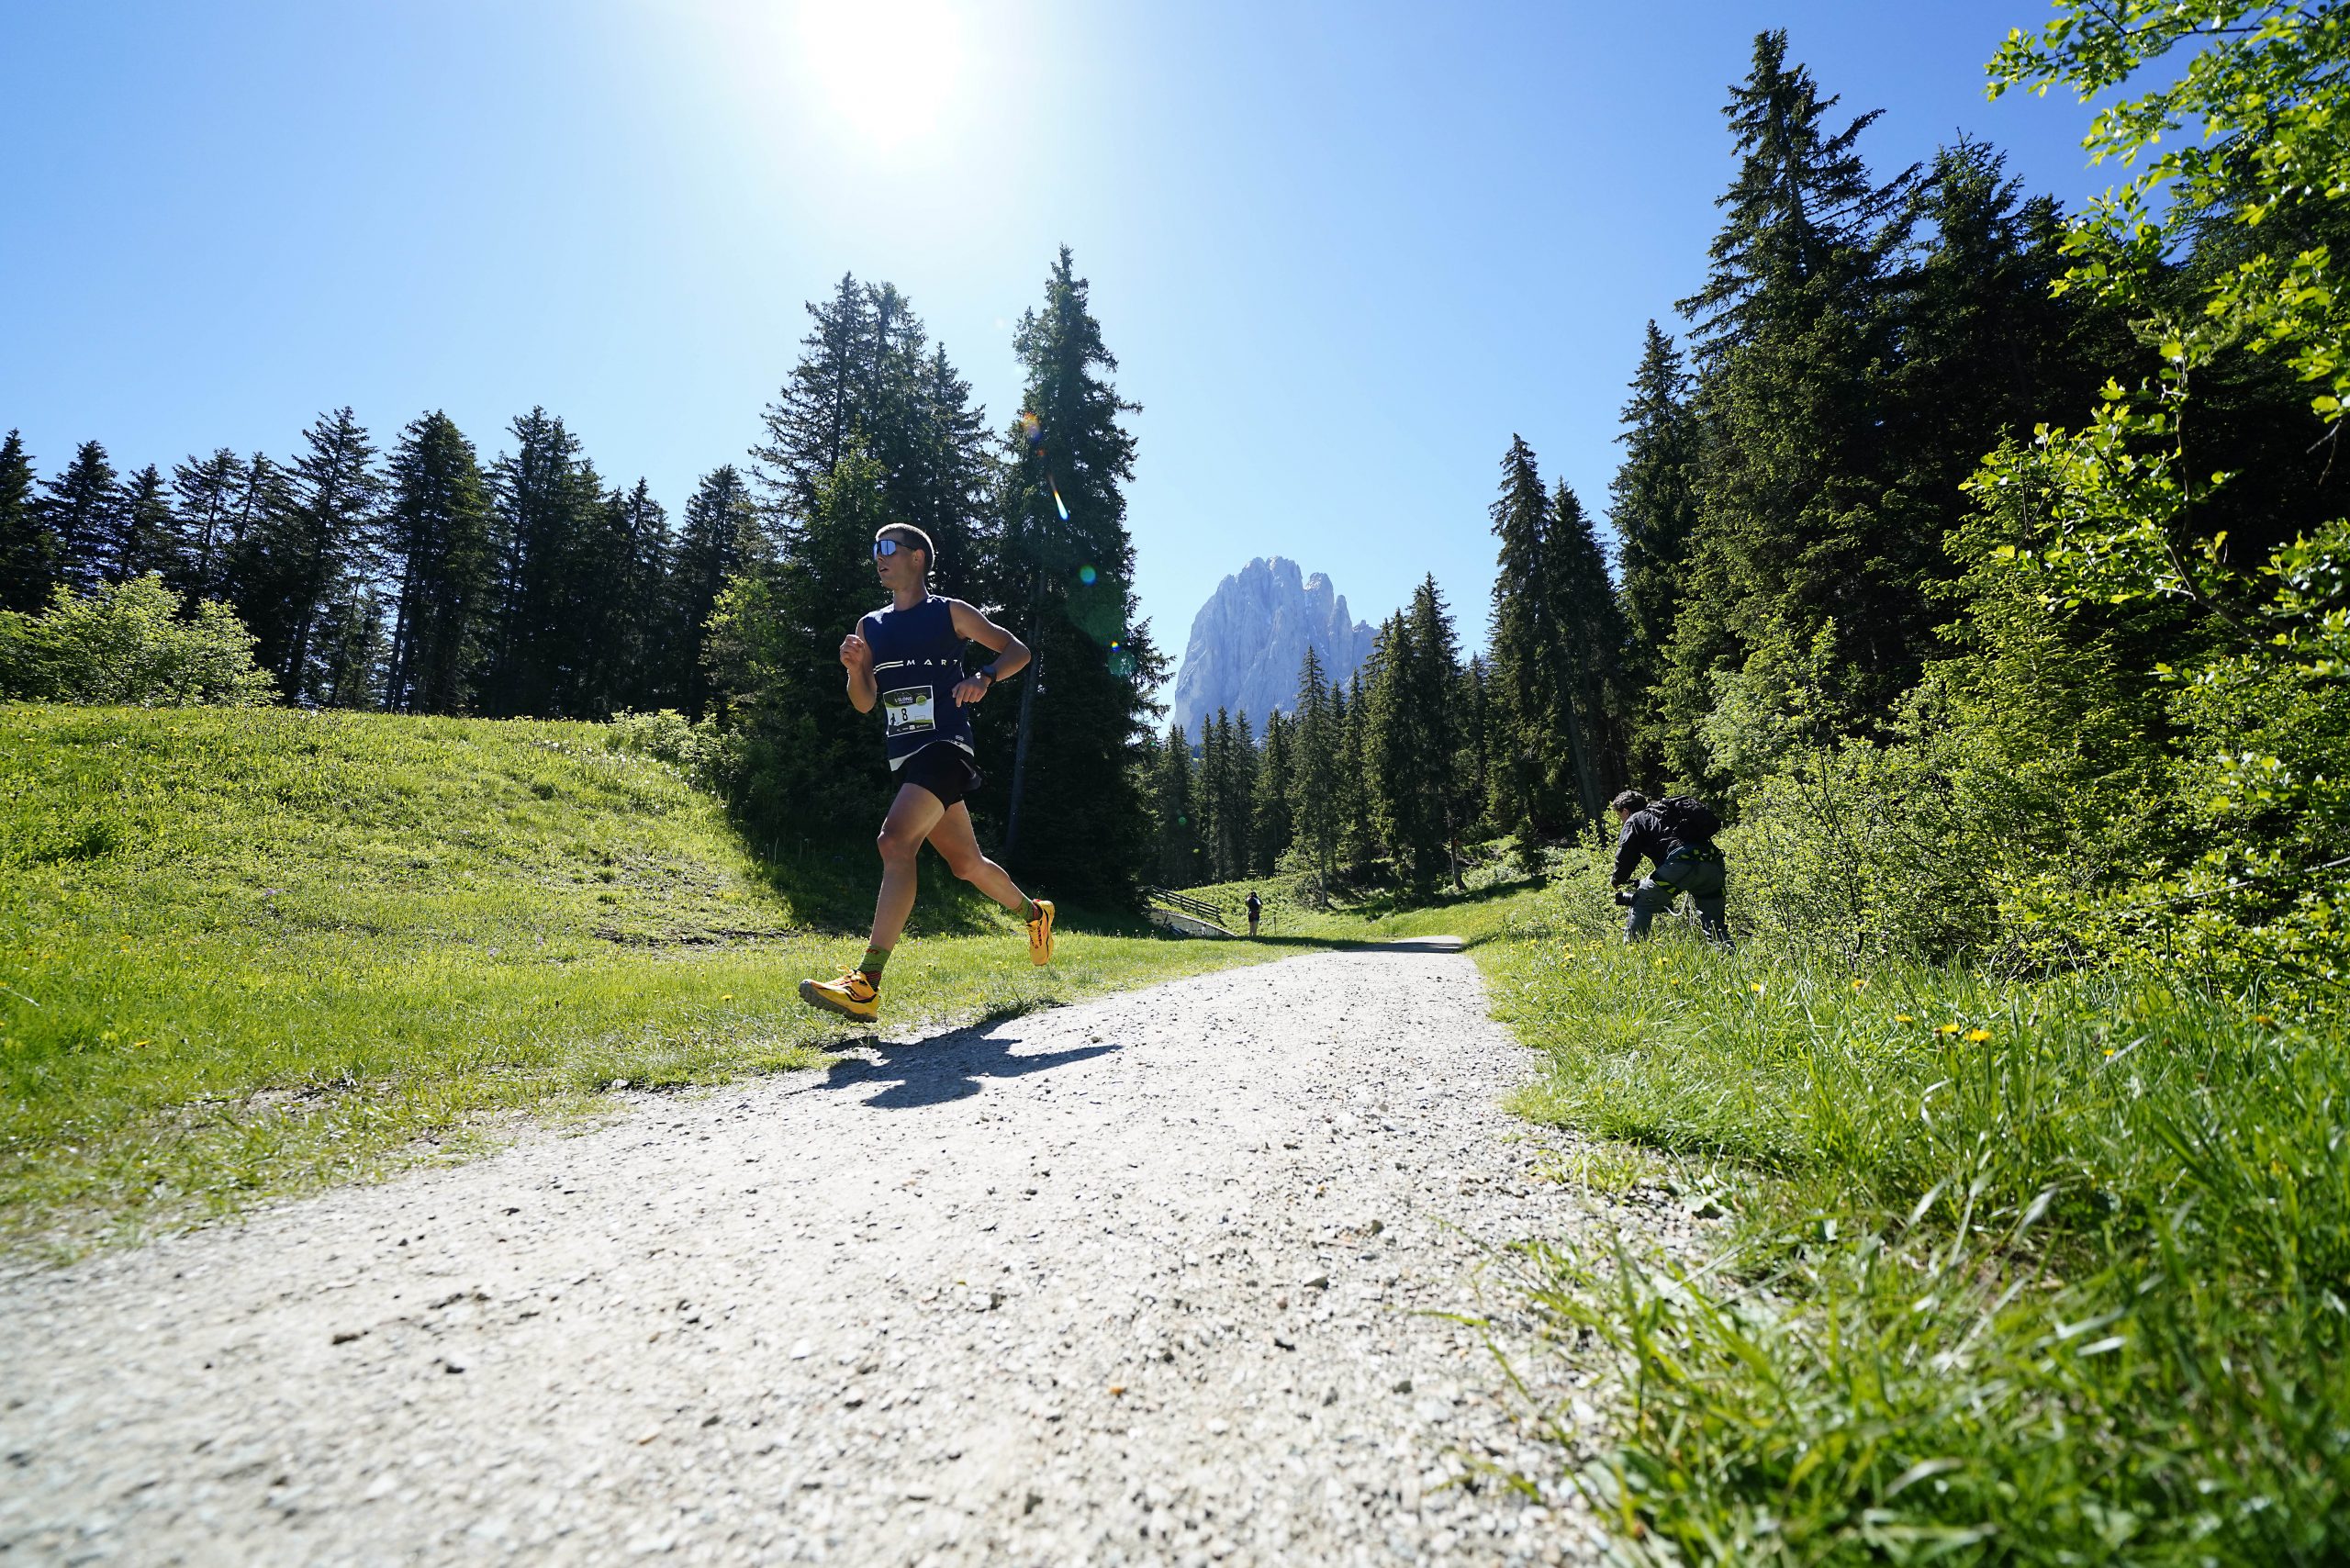 Dolomites Saslong Half Marathon